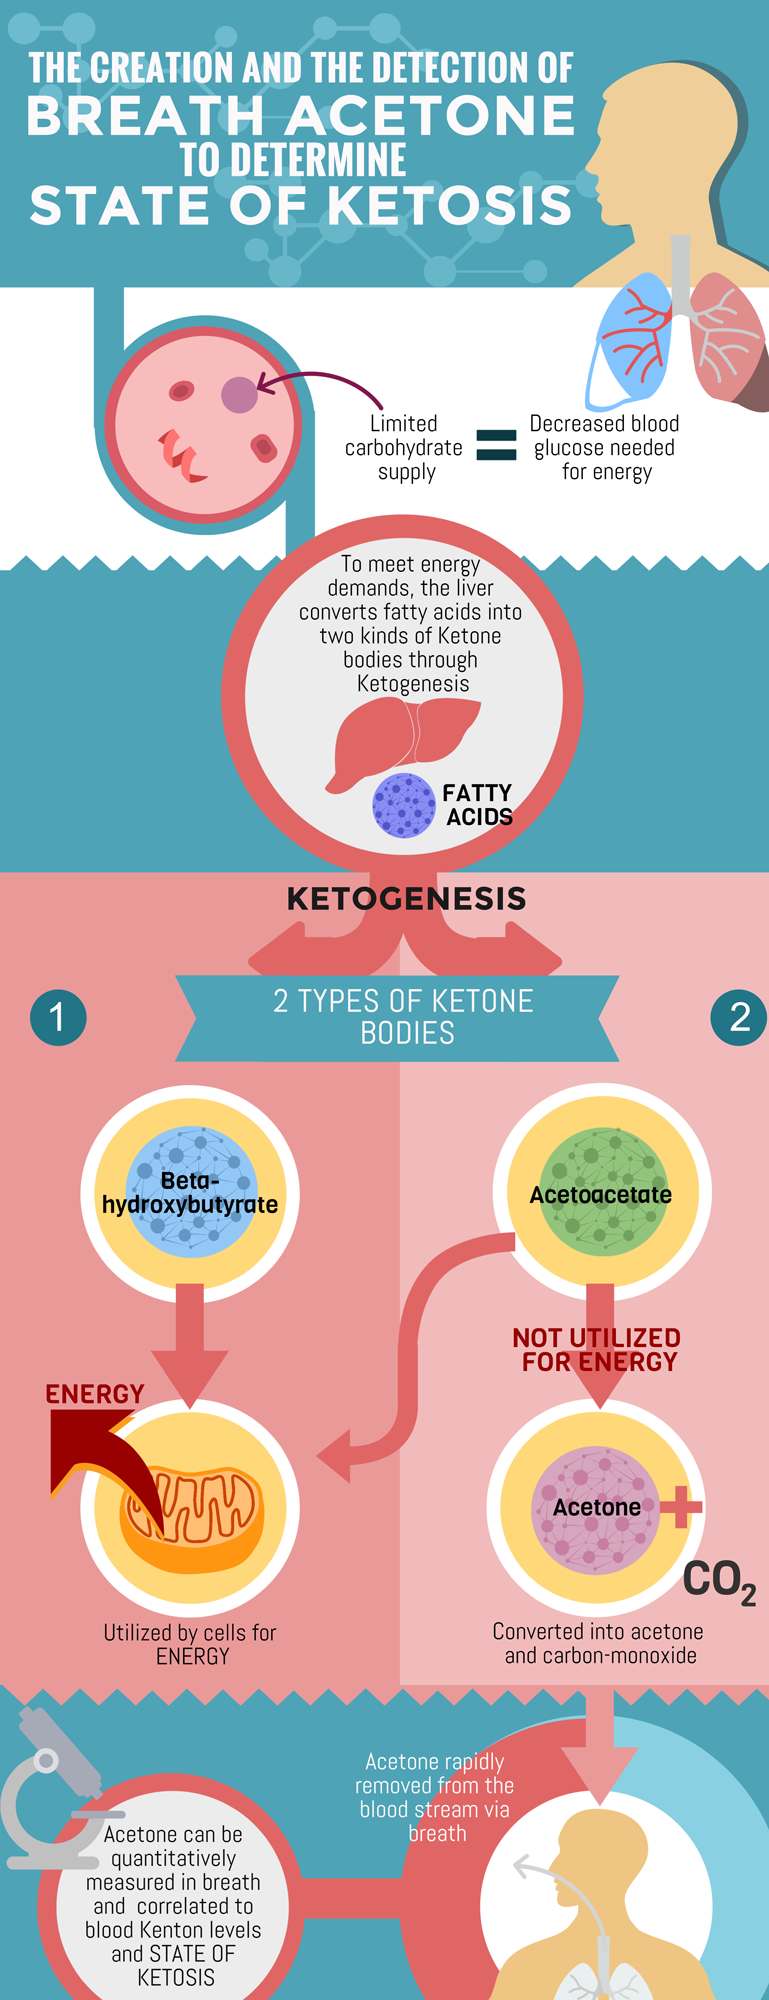 About Ketosis | Test for Ketones | Metron® Breath Ketone Test - METRON